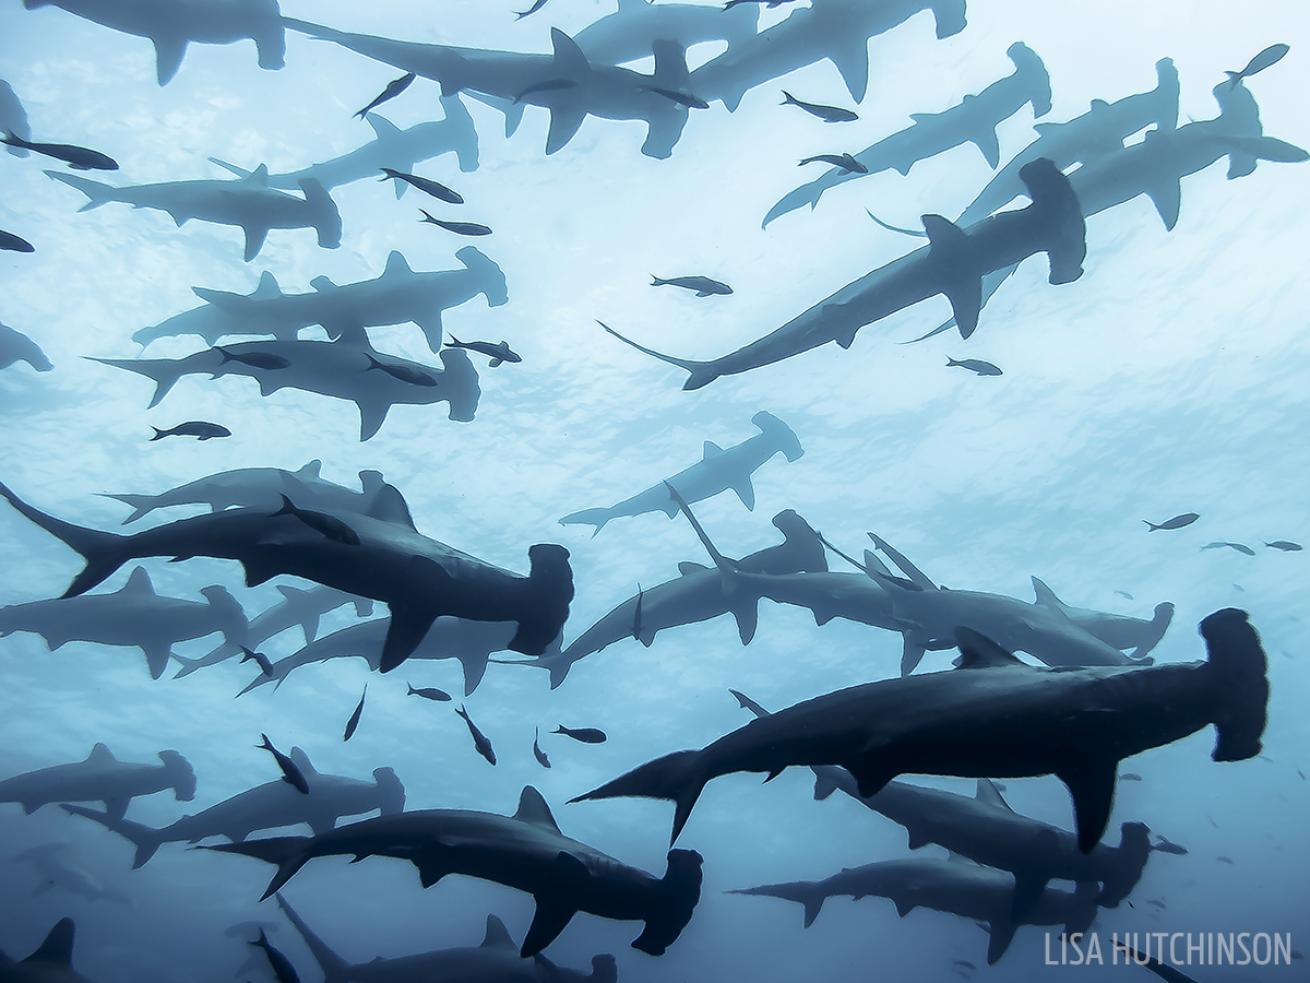 School of Hammerhead sharks in the Galapagos